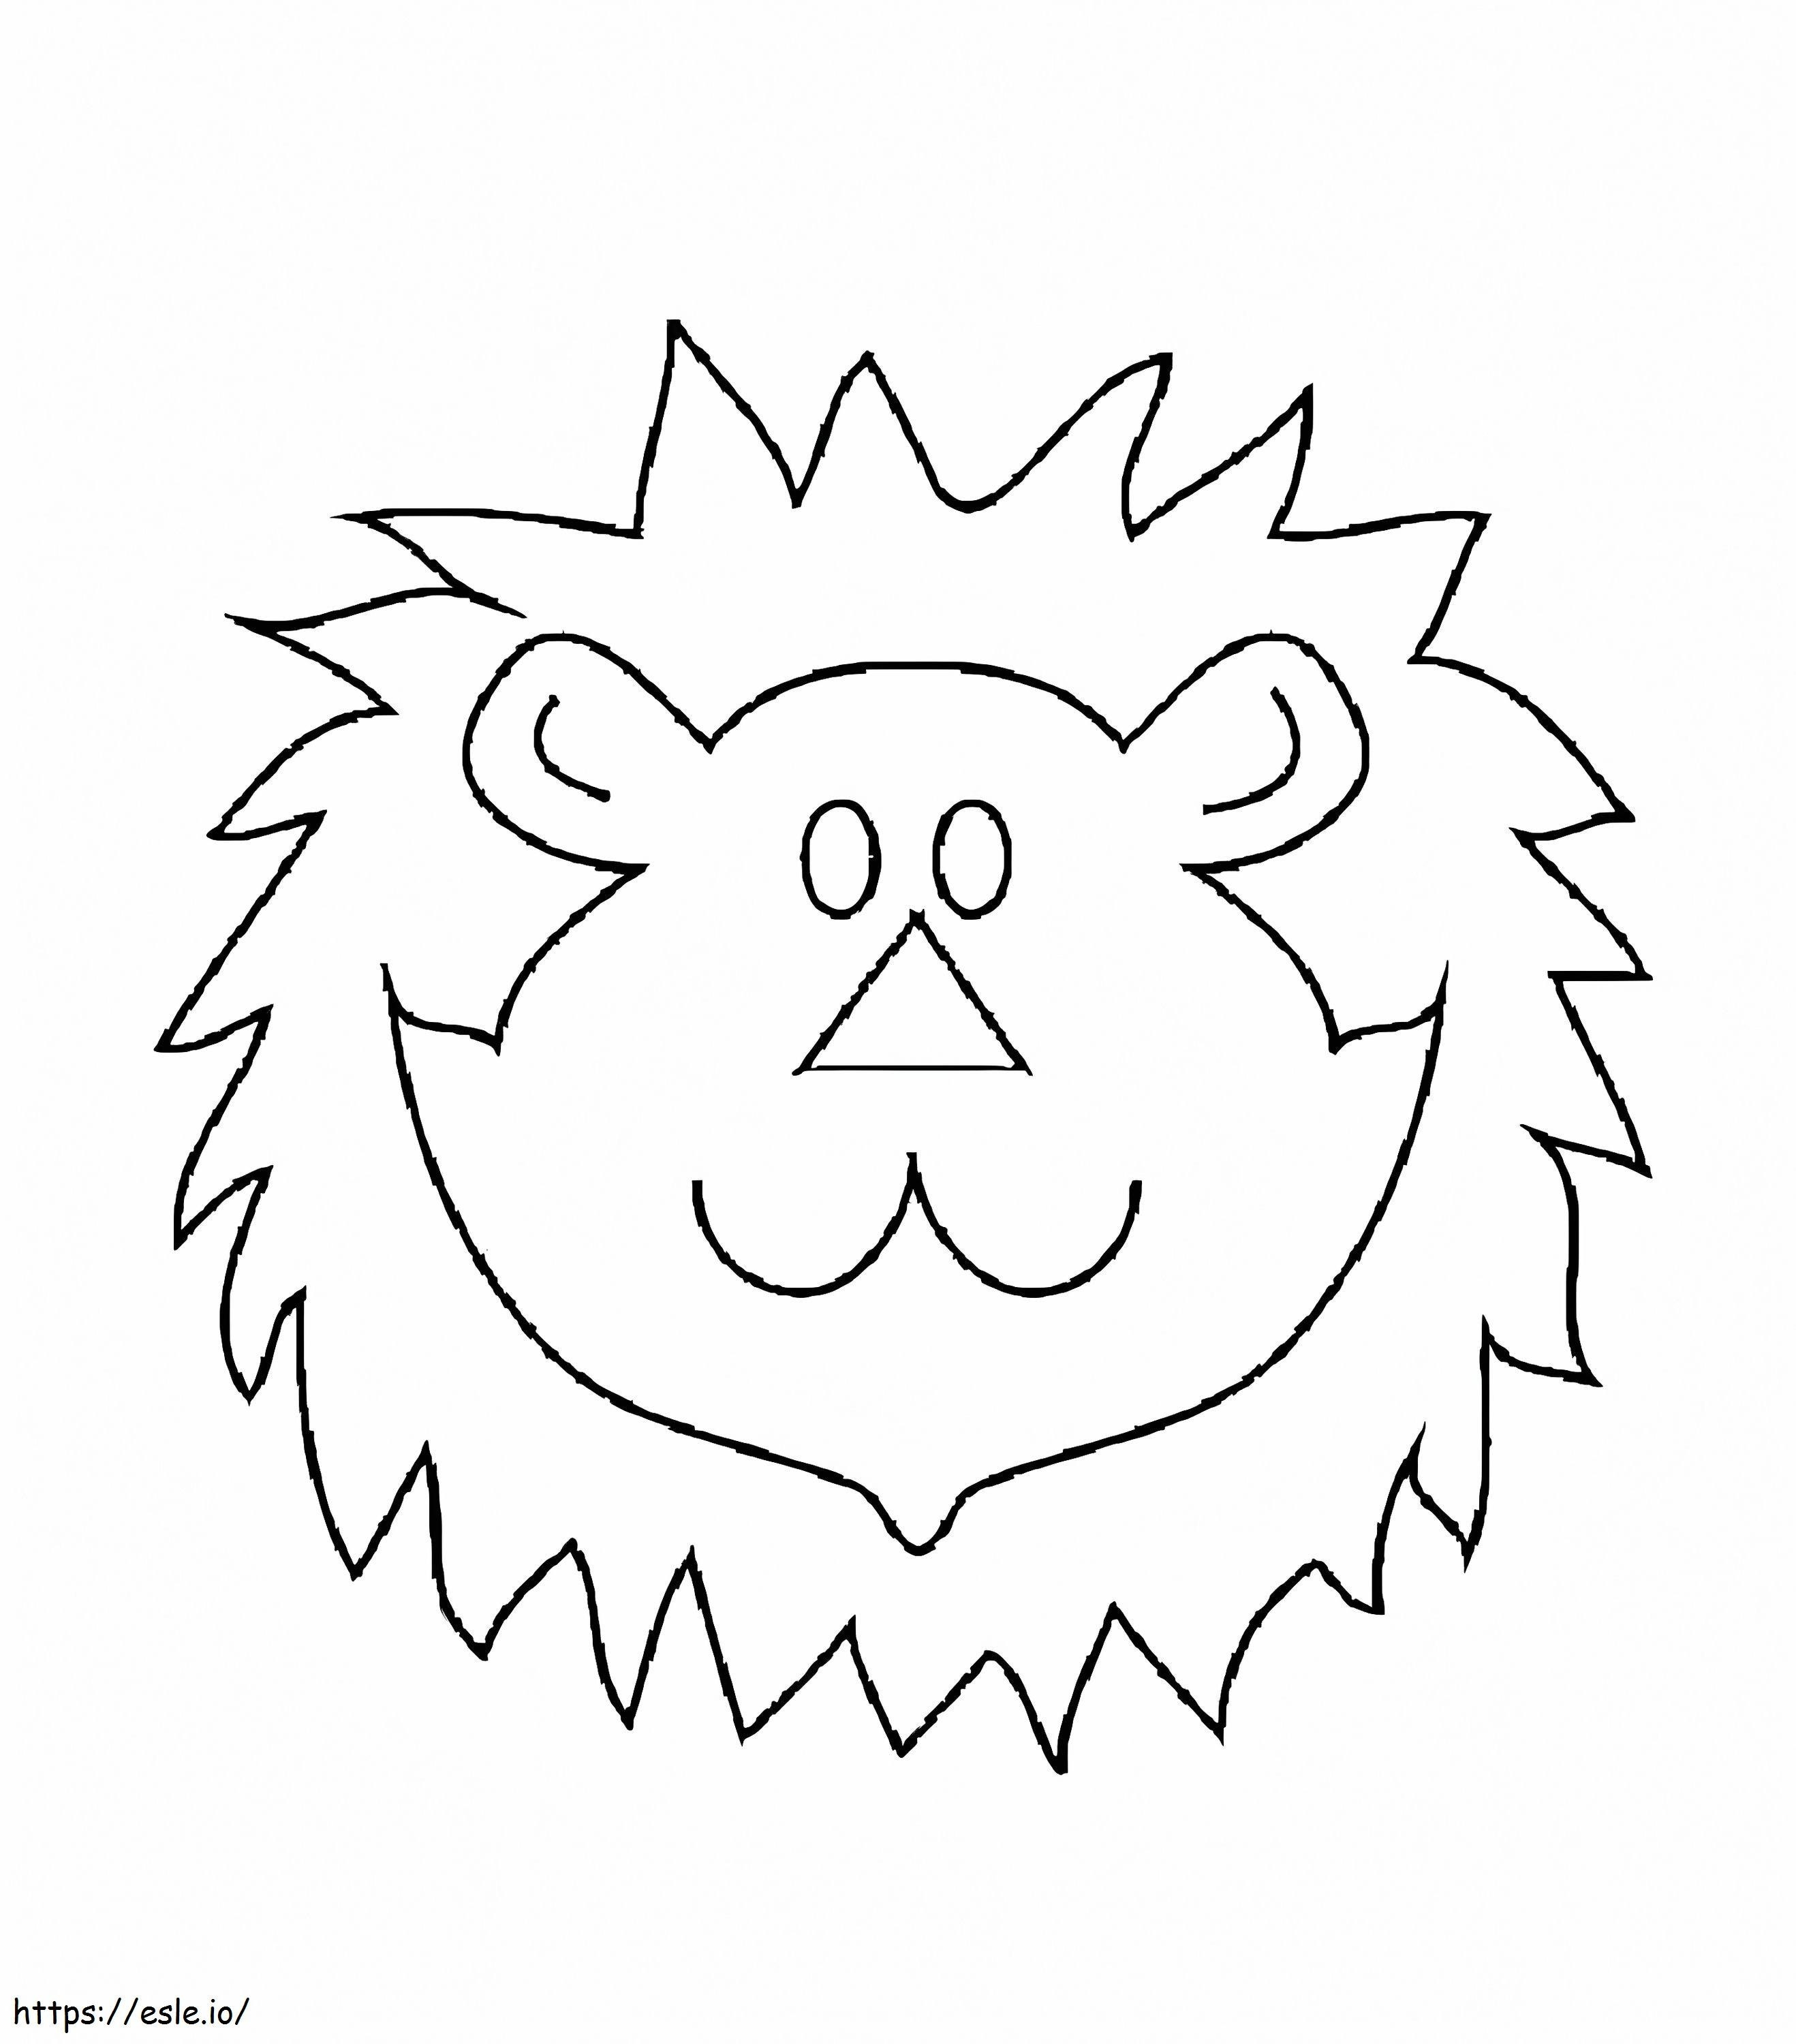 Cara de Leão Simples para colorir